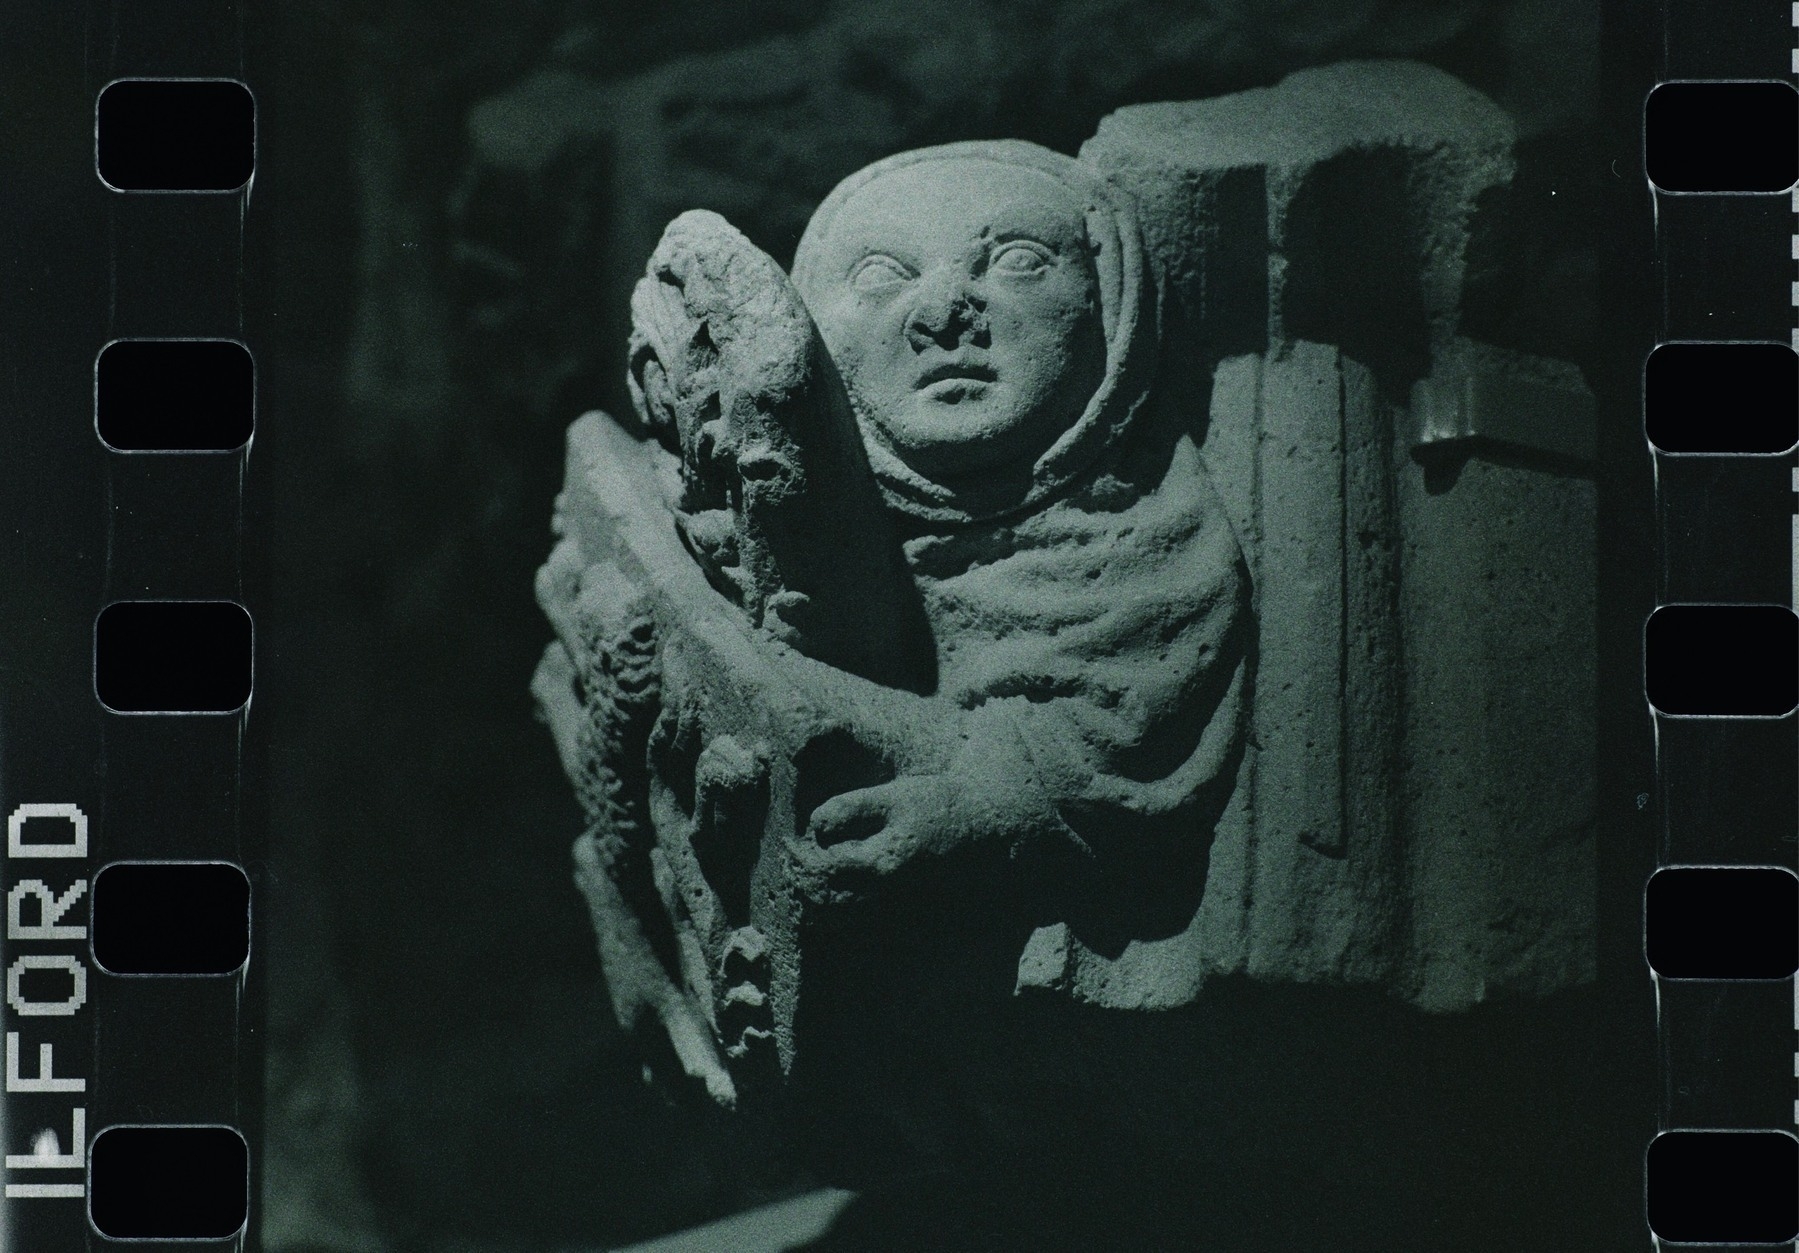 medieval sculpture of figure holding heraldic shield